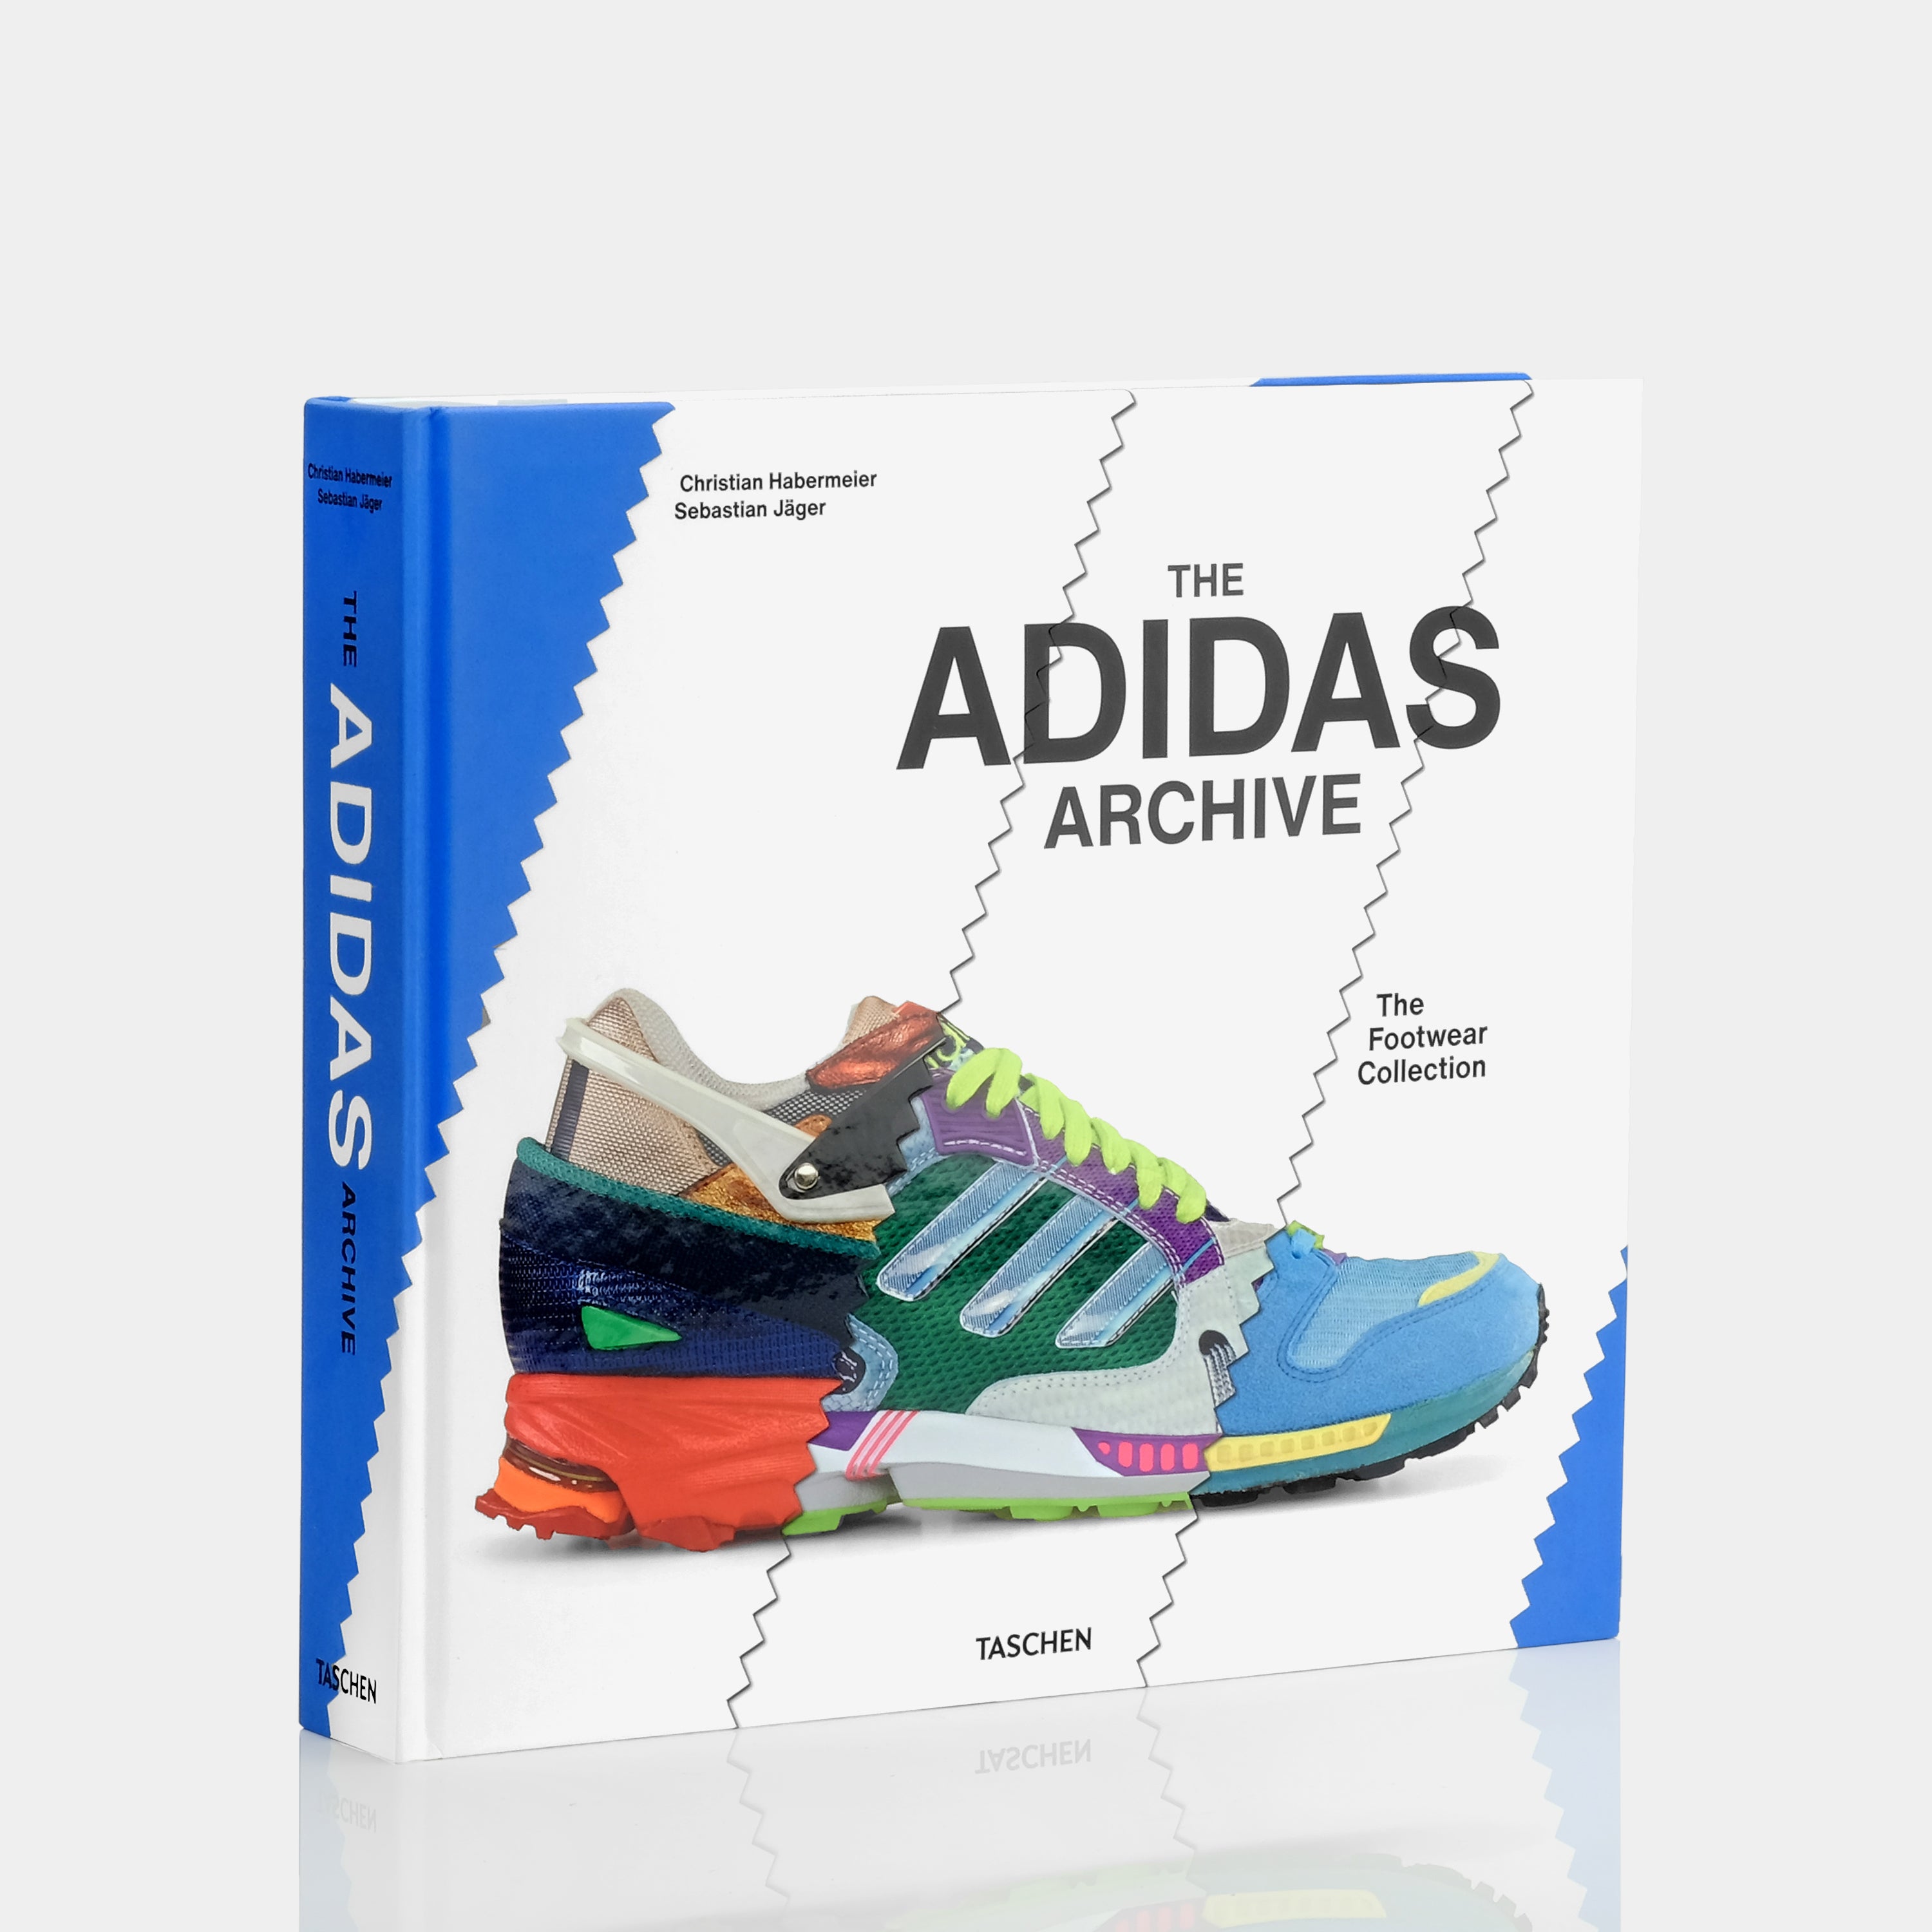 The Adidas Archive: The Footwear Collection by Christian Habermeier and Sebastian Jäger Taschen Book